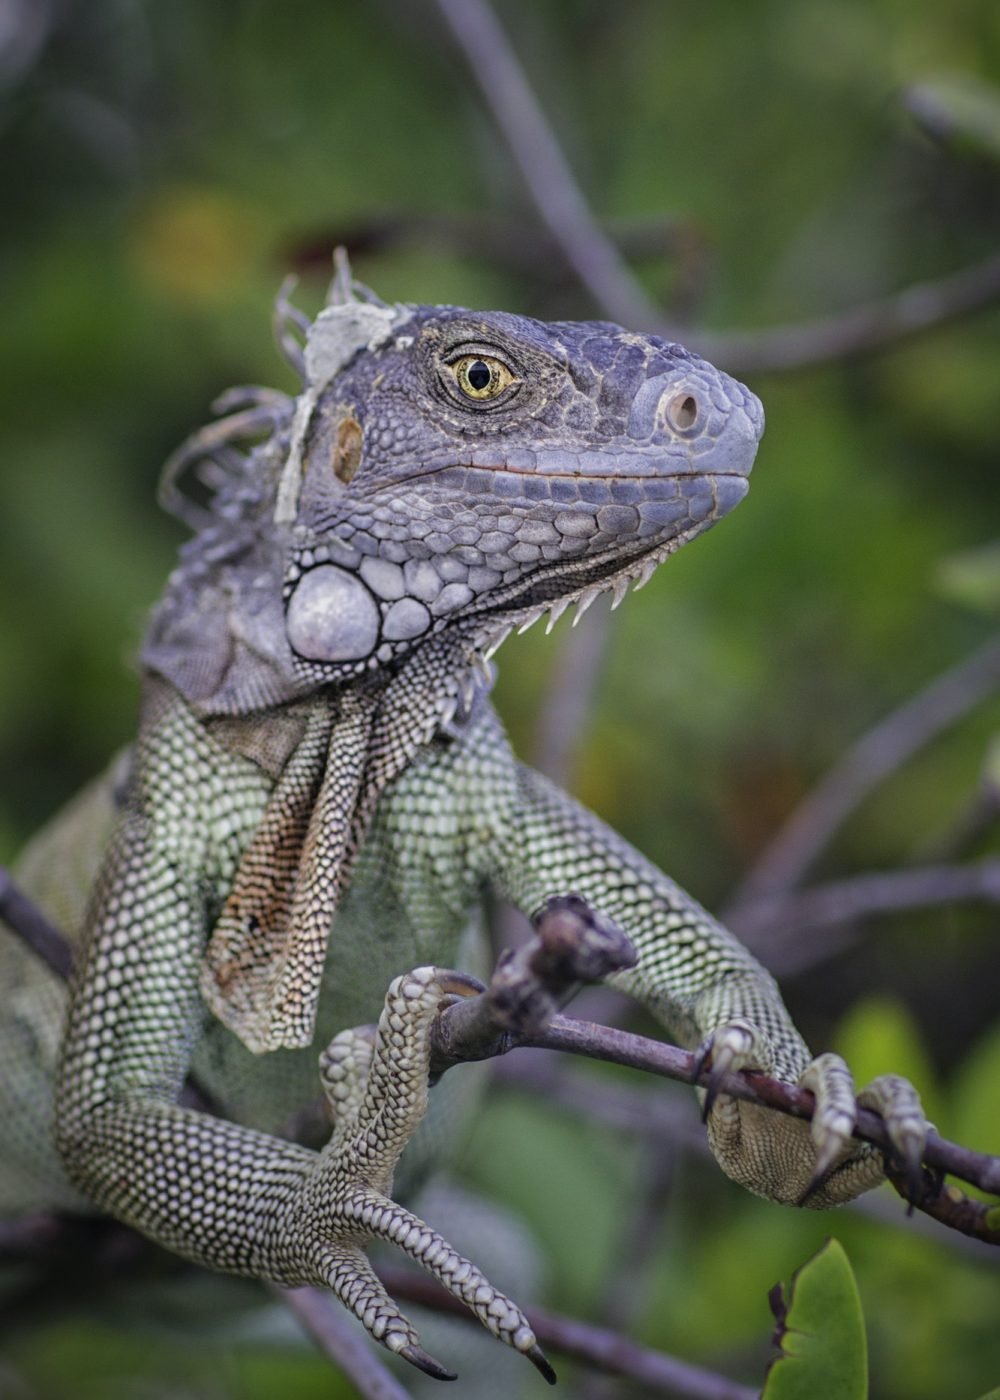 iguana-on-branch-looking-at-camera-smiling-st-croix-us-virgin-islands.jpg